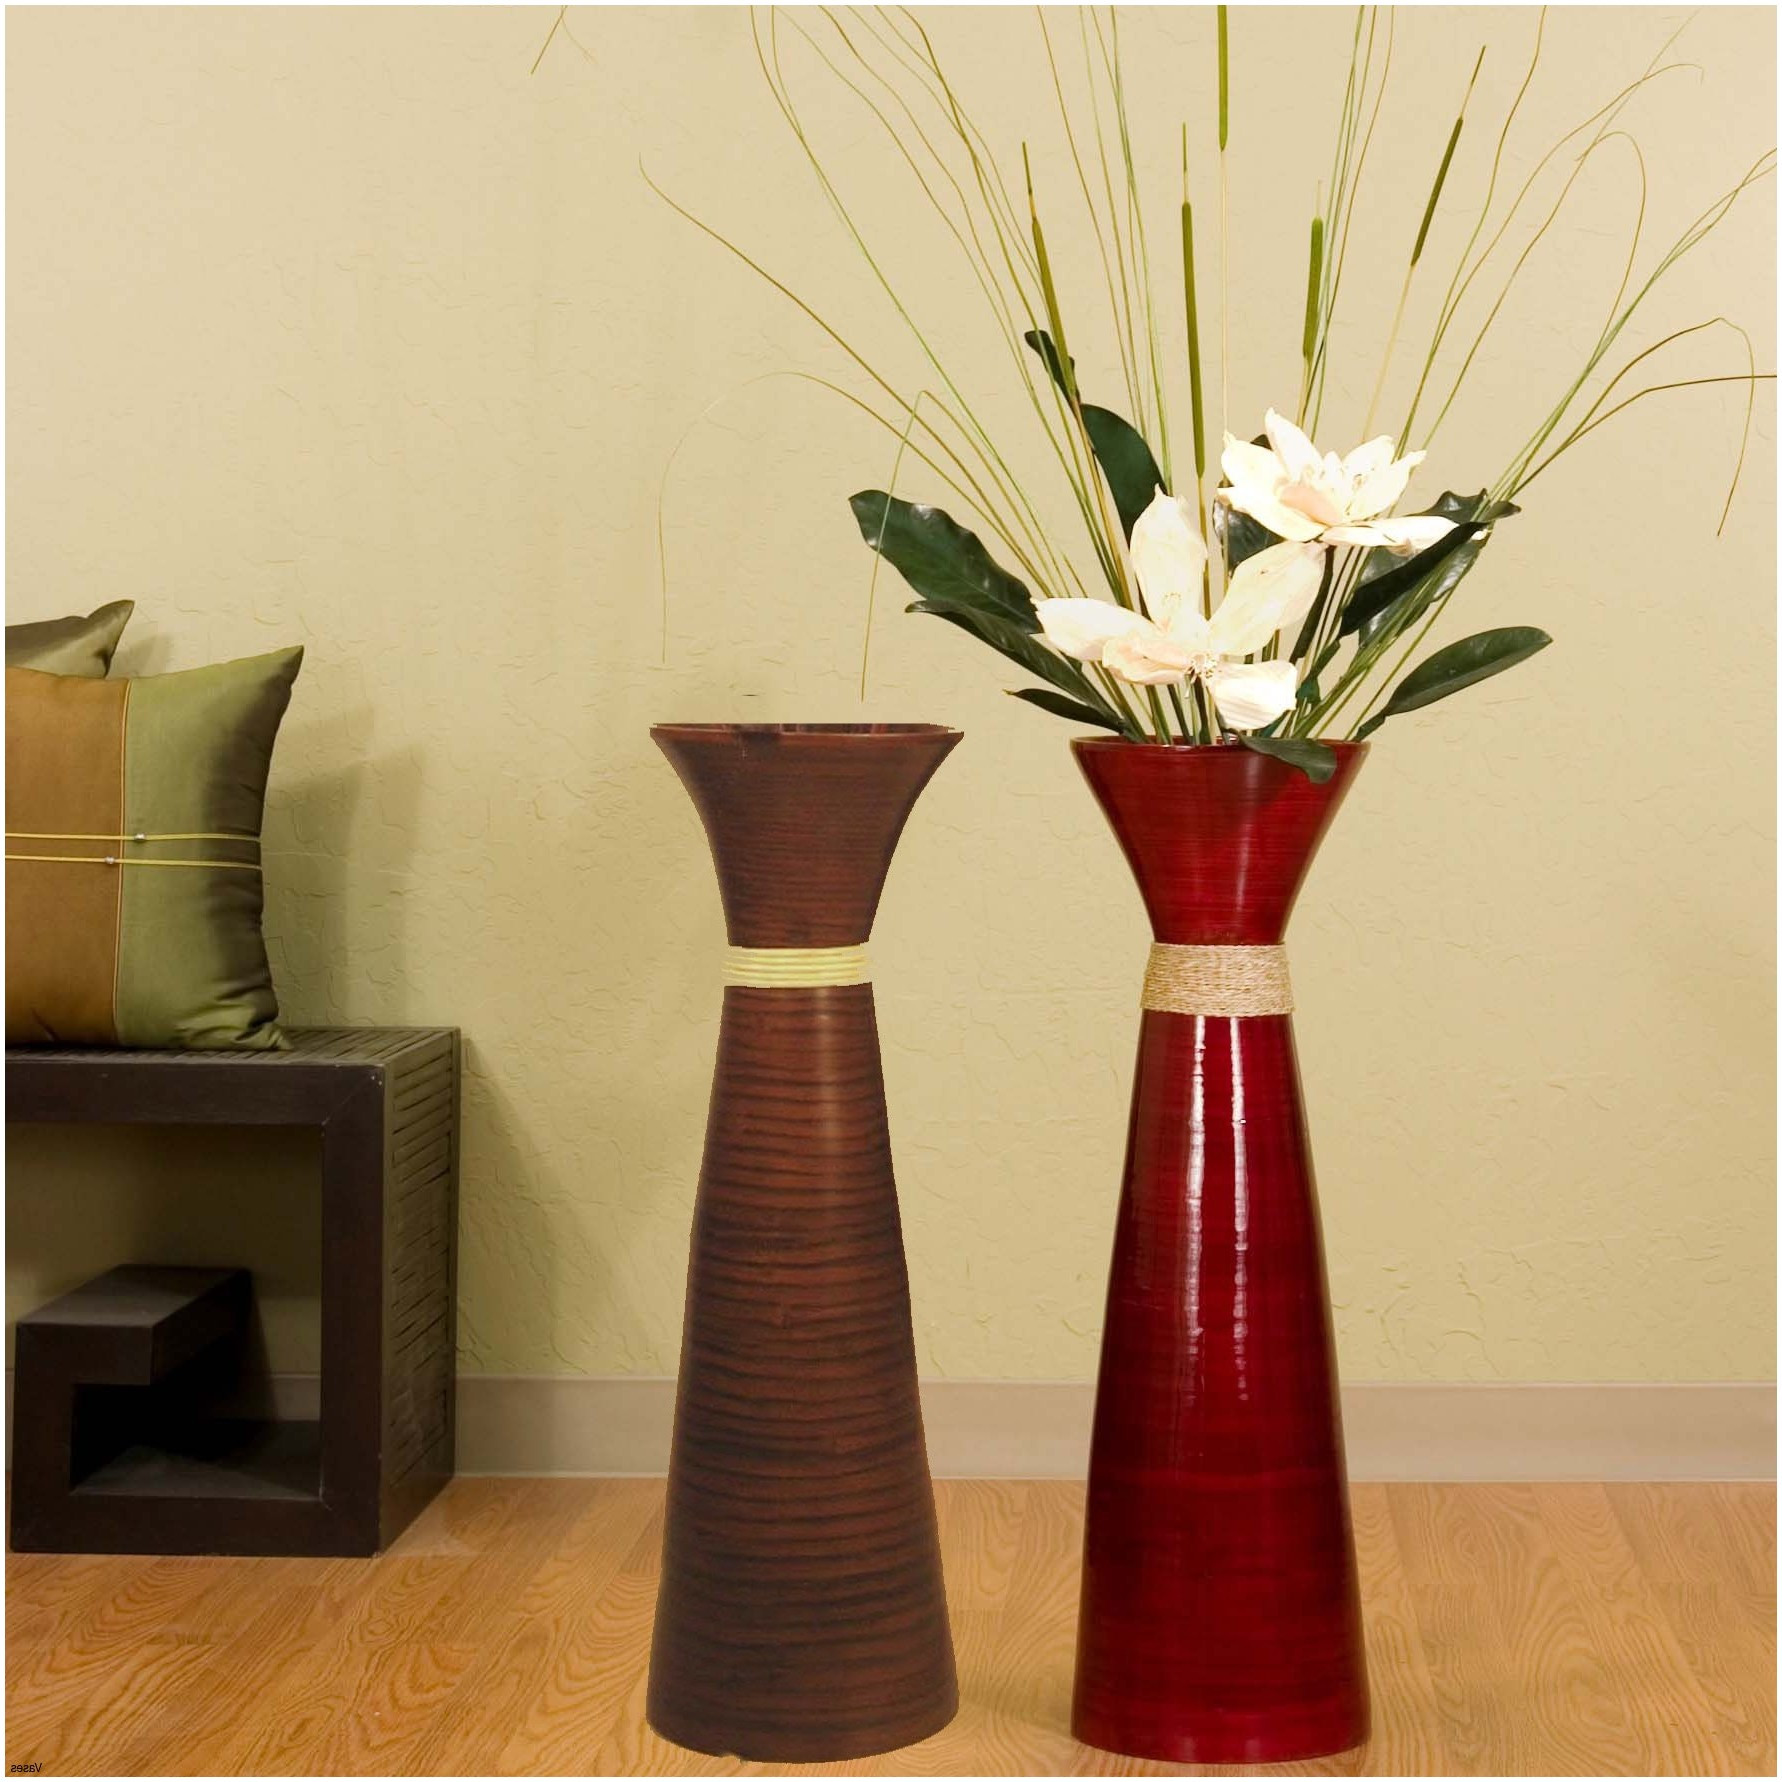 20 Great Big oriental Vases 2024 free download big oriental vases of 21 beau decorative vases anciendemutu org intended for floor vase colorsh vases red decorative image colorsi 0d